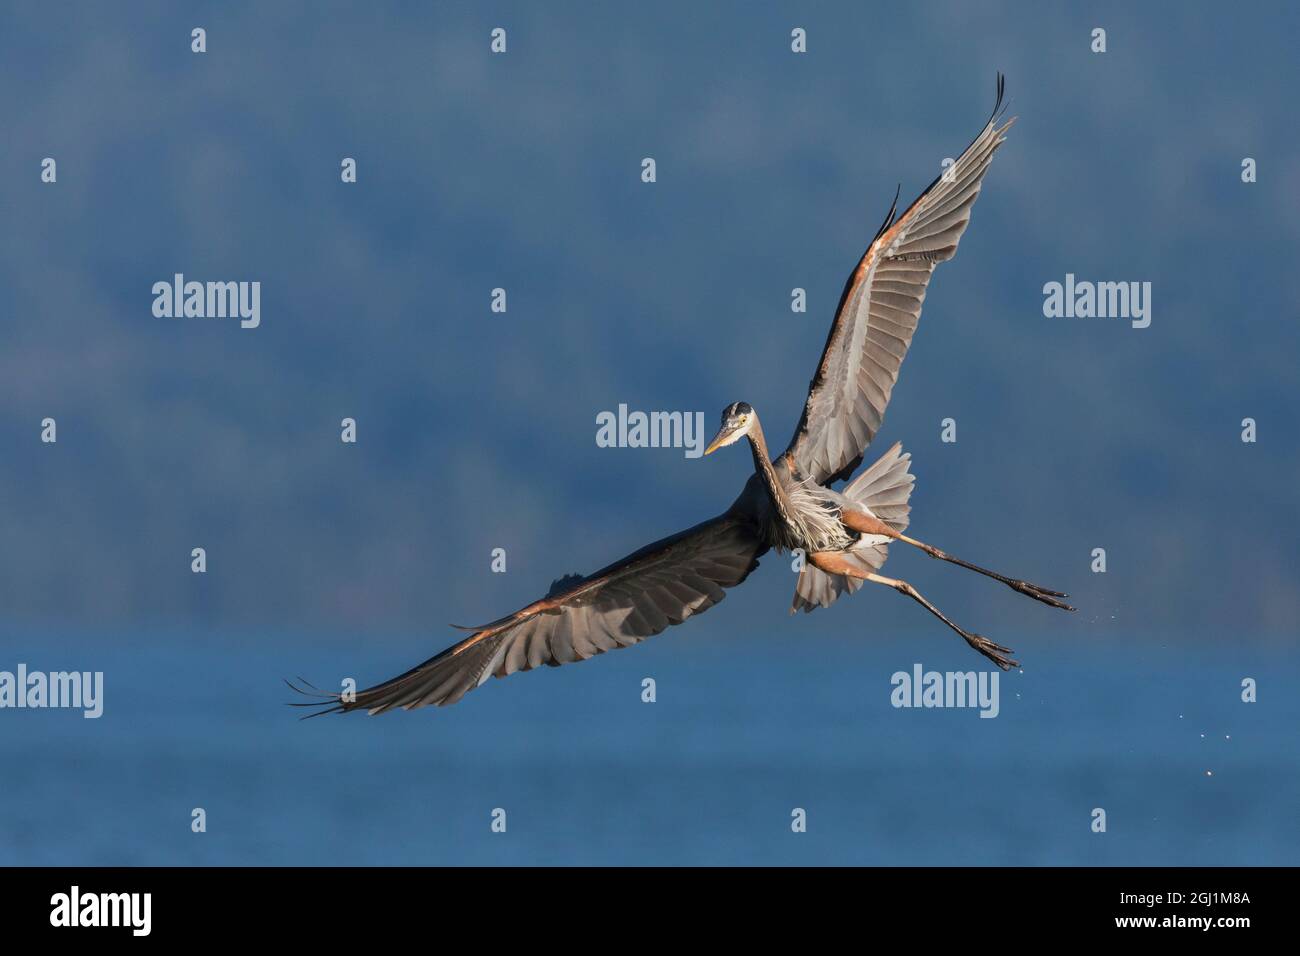 Great blue heron alighting Stock Photo